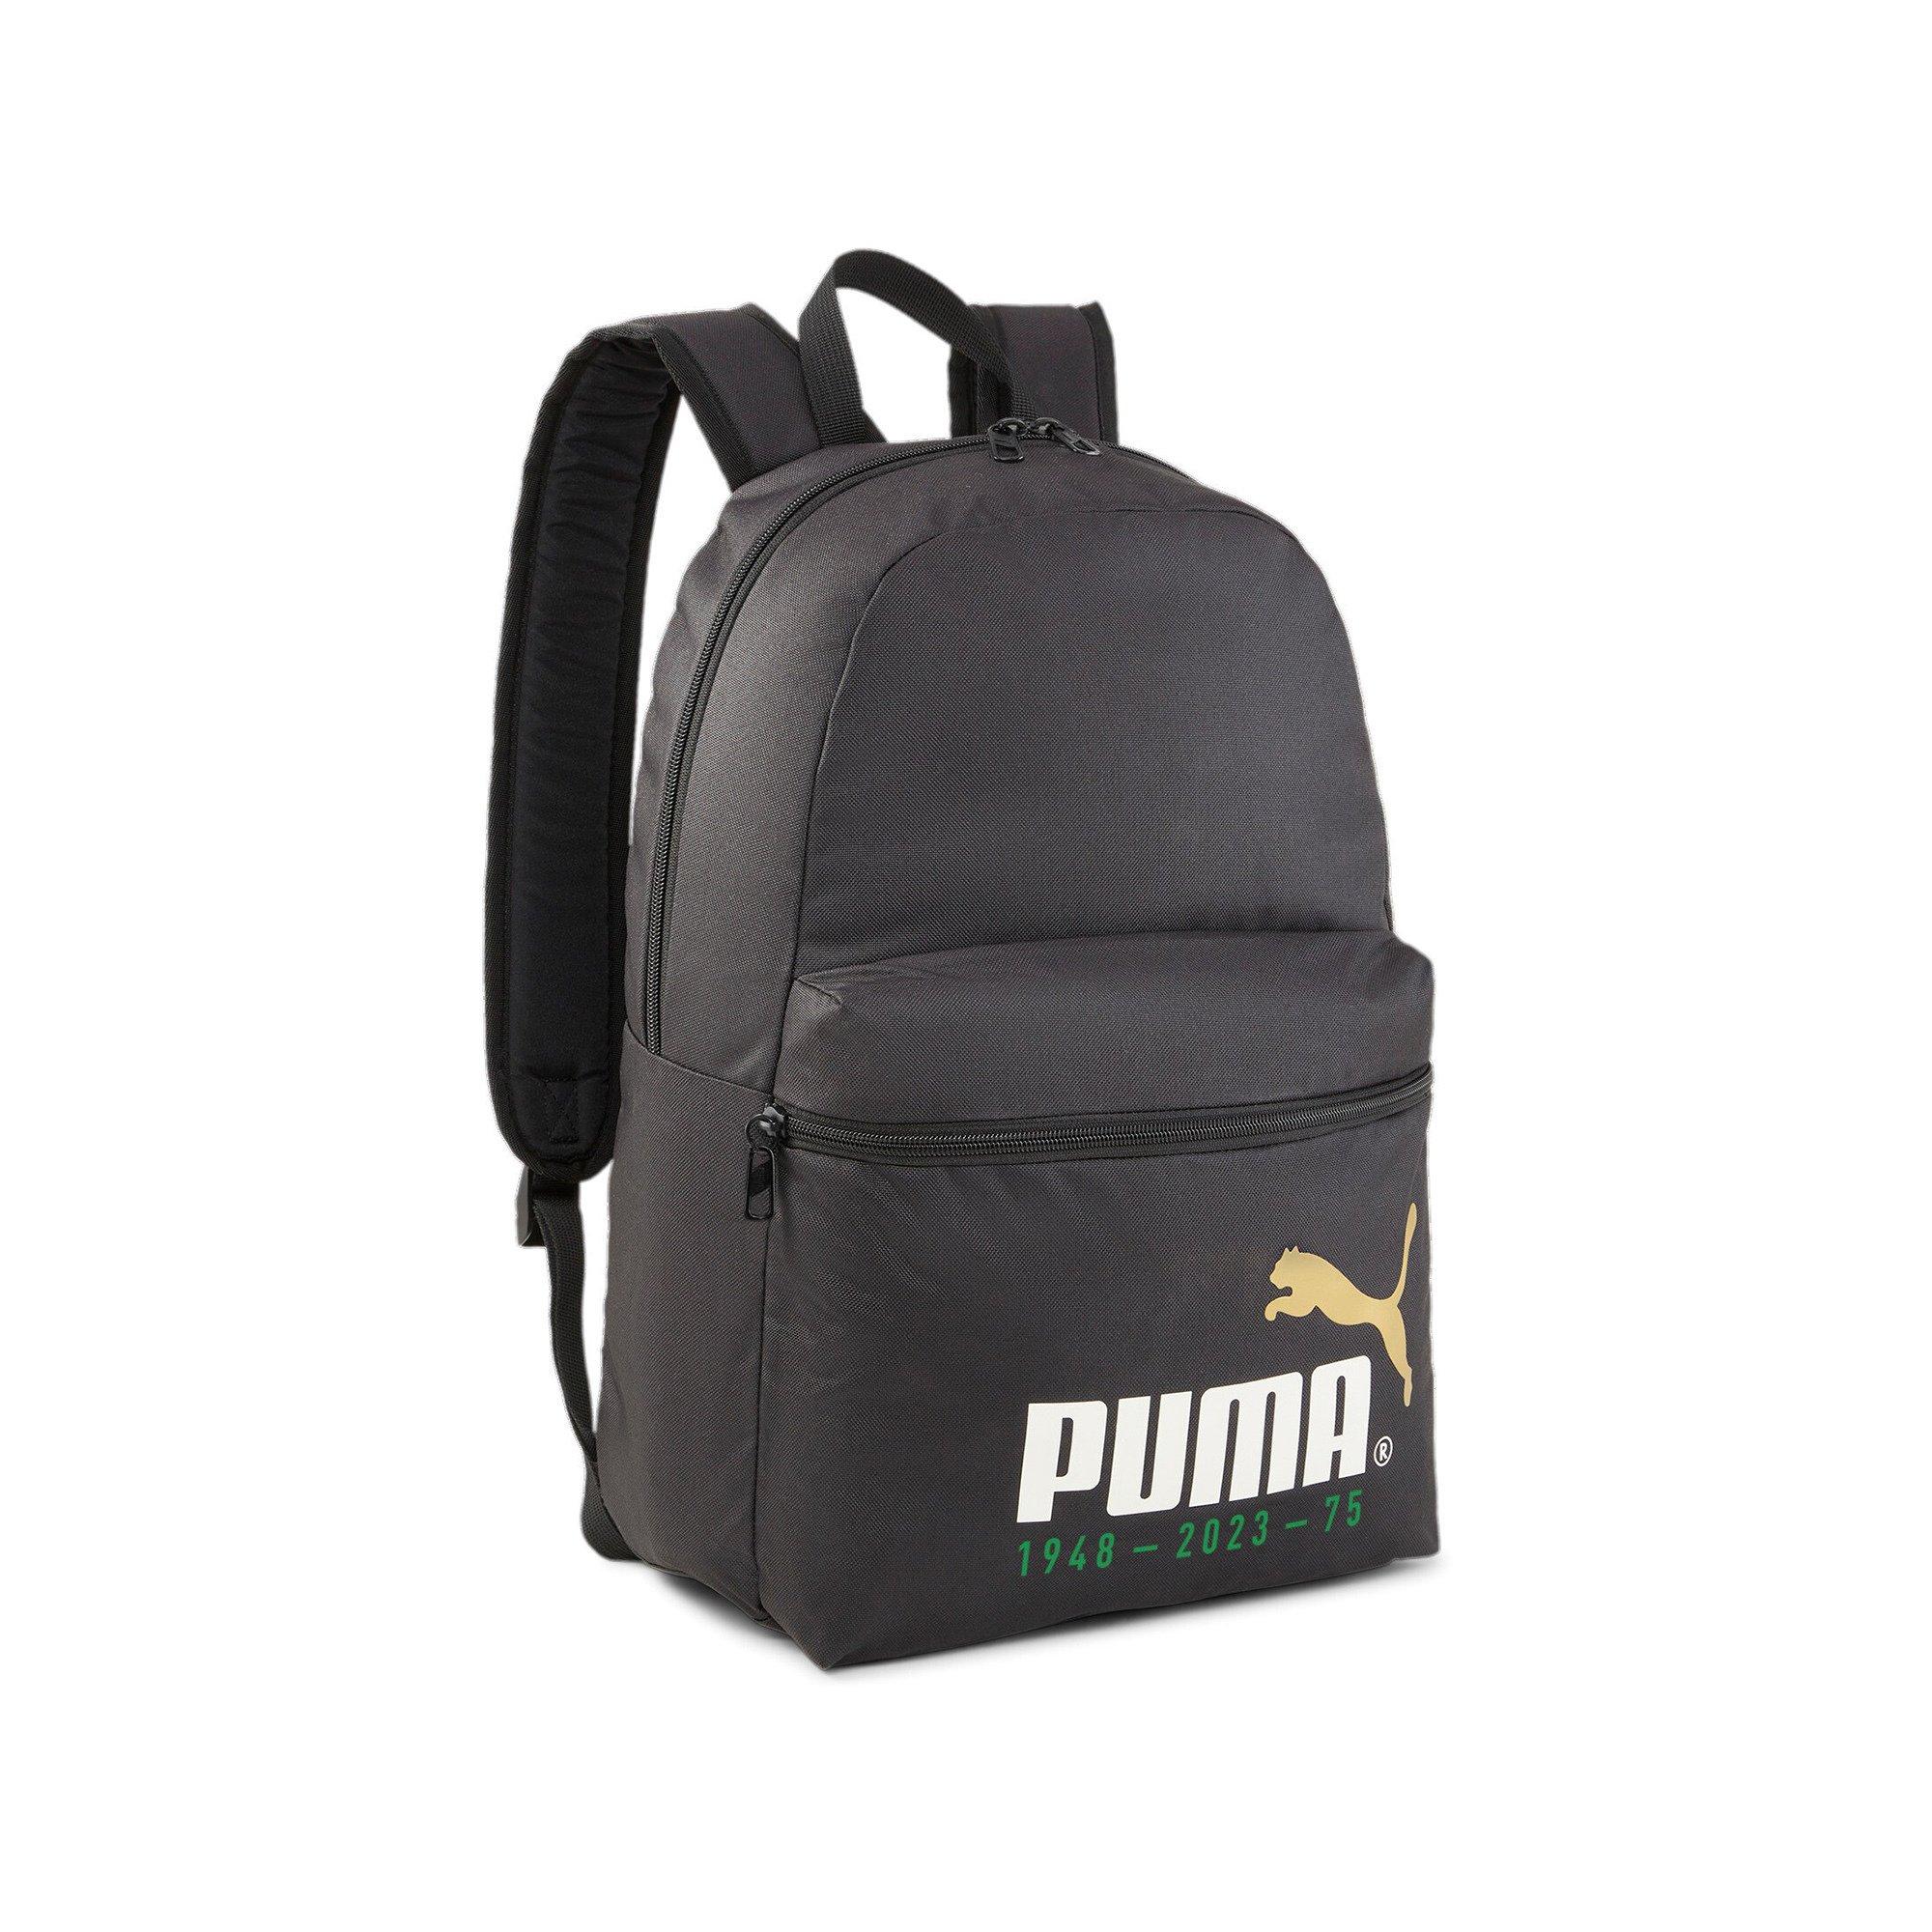 PUMA PUMA Phase 75 Years Celebration Backpack Sac à dos 